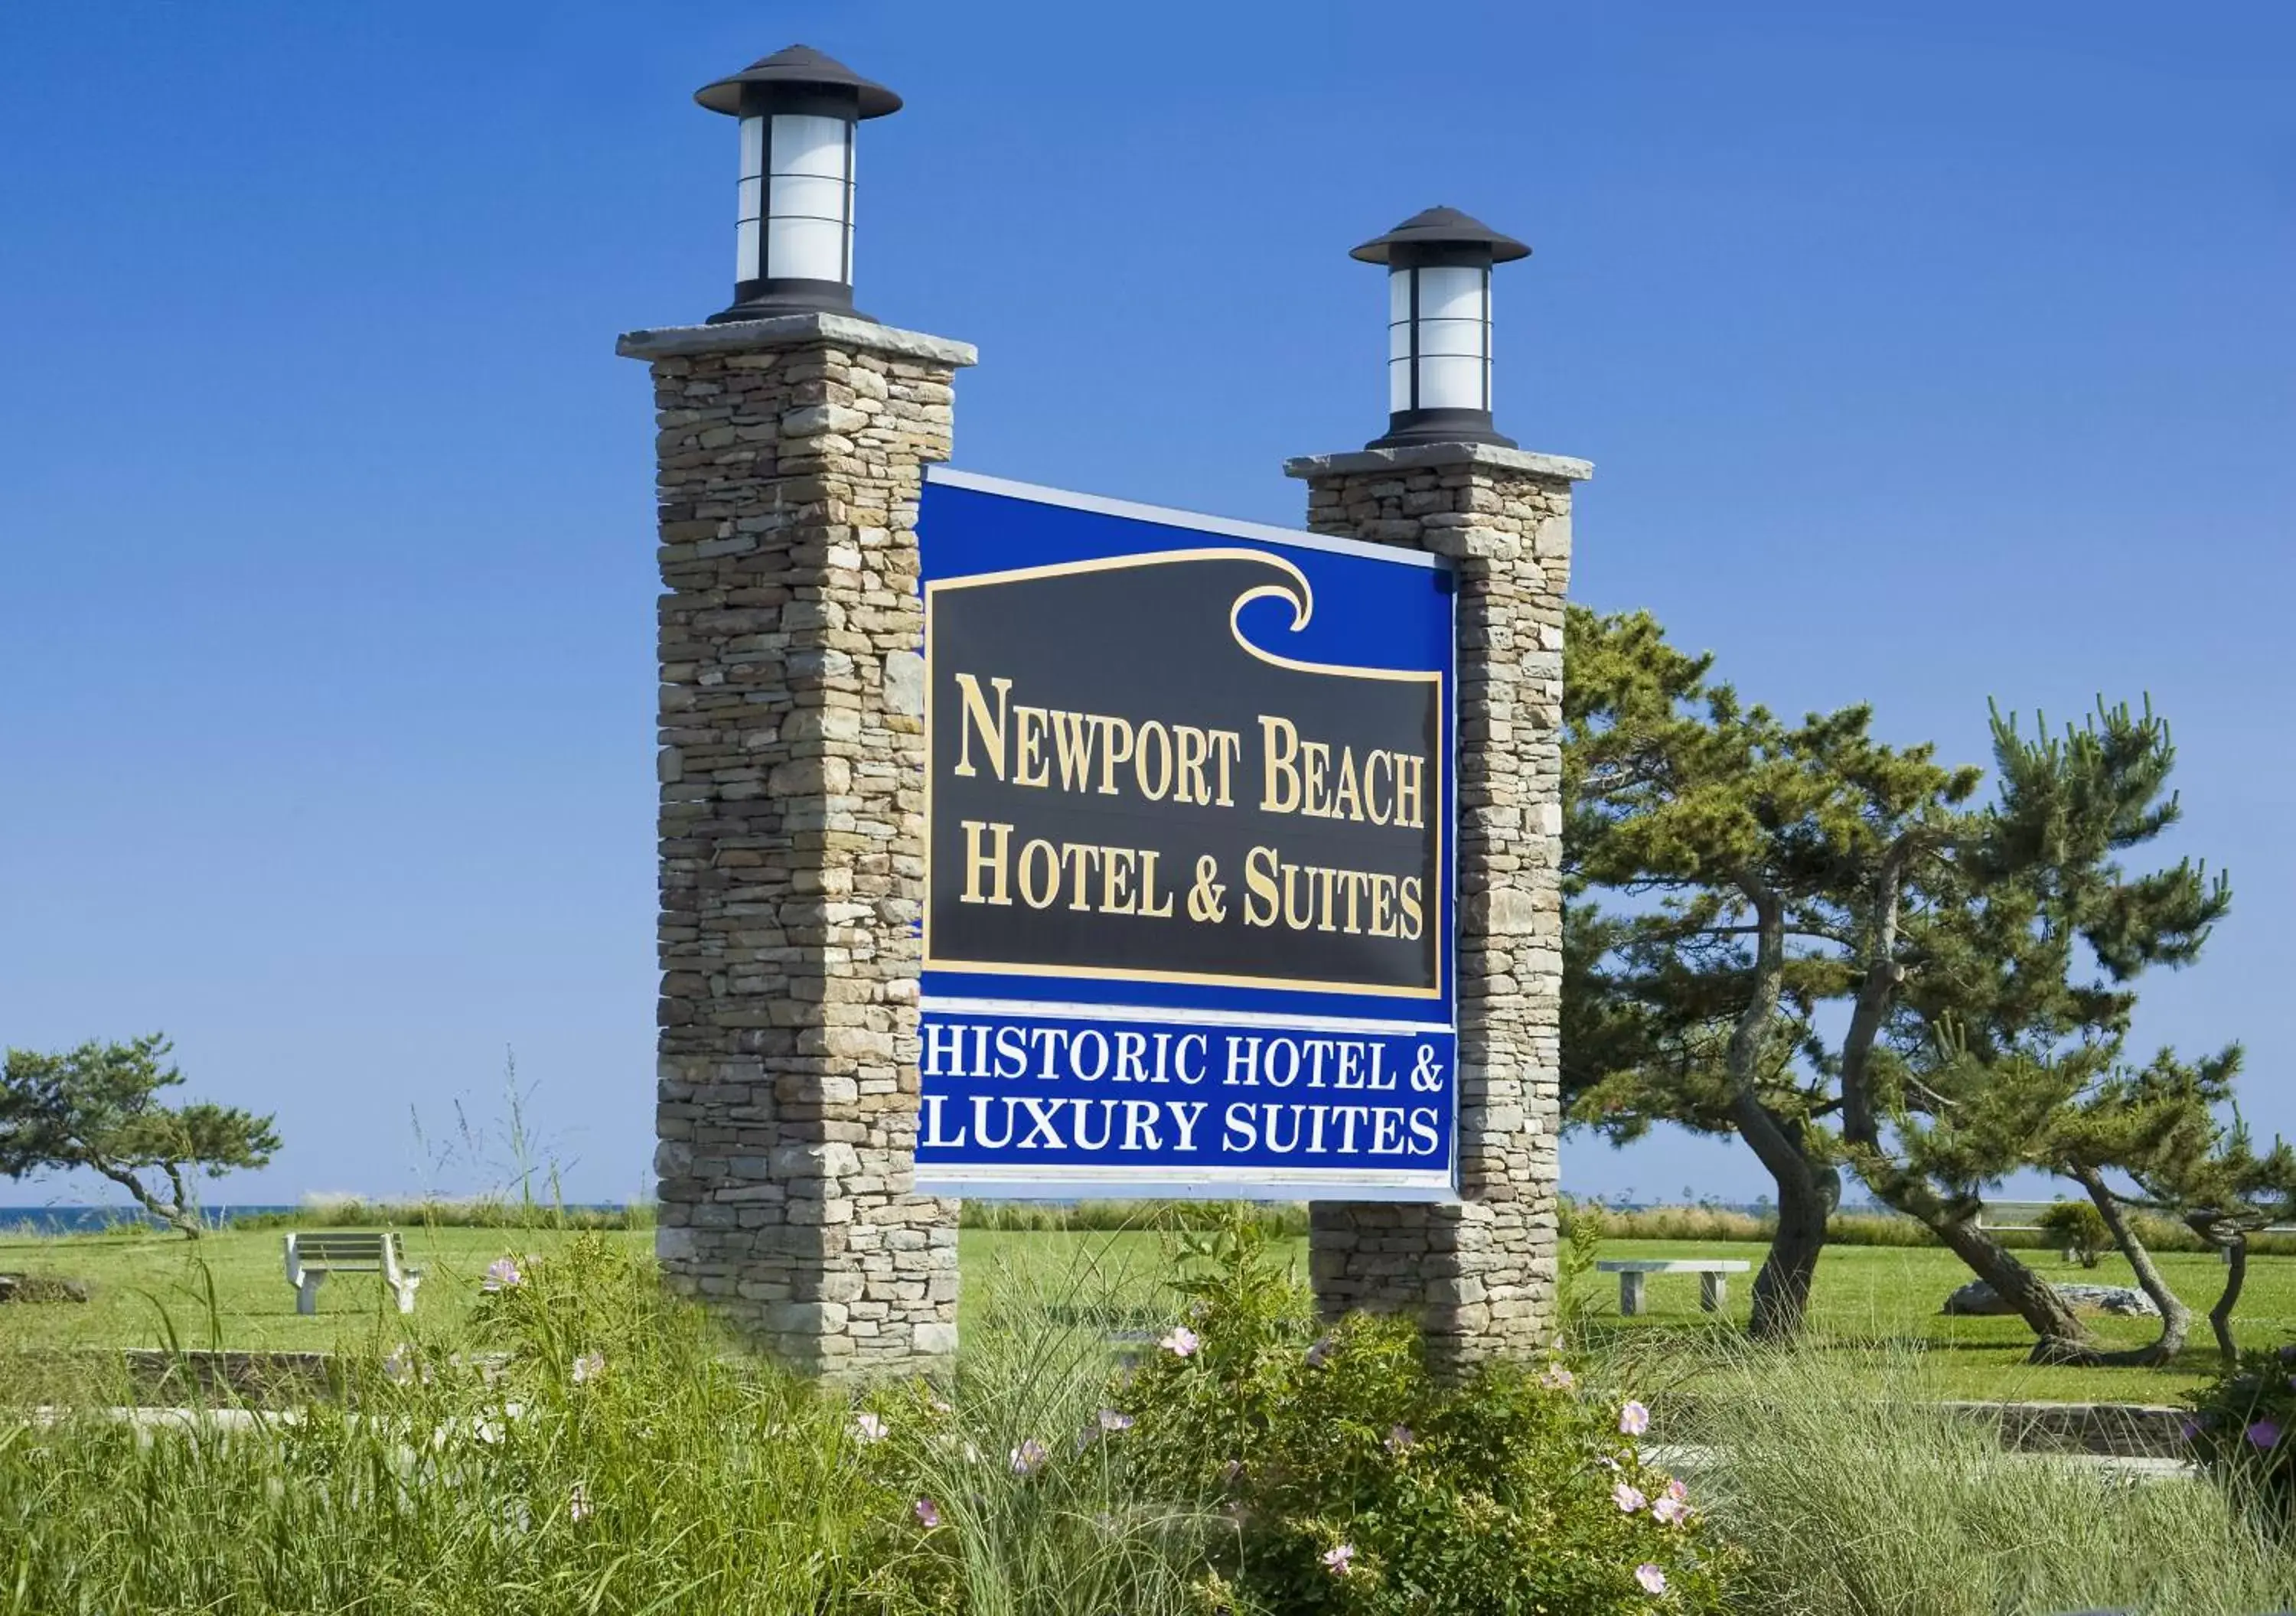 Nearby landmark in Newport Beach Hotel & Suites